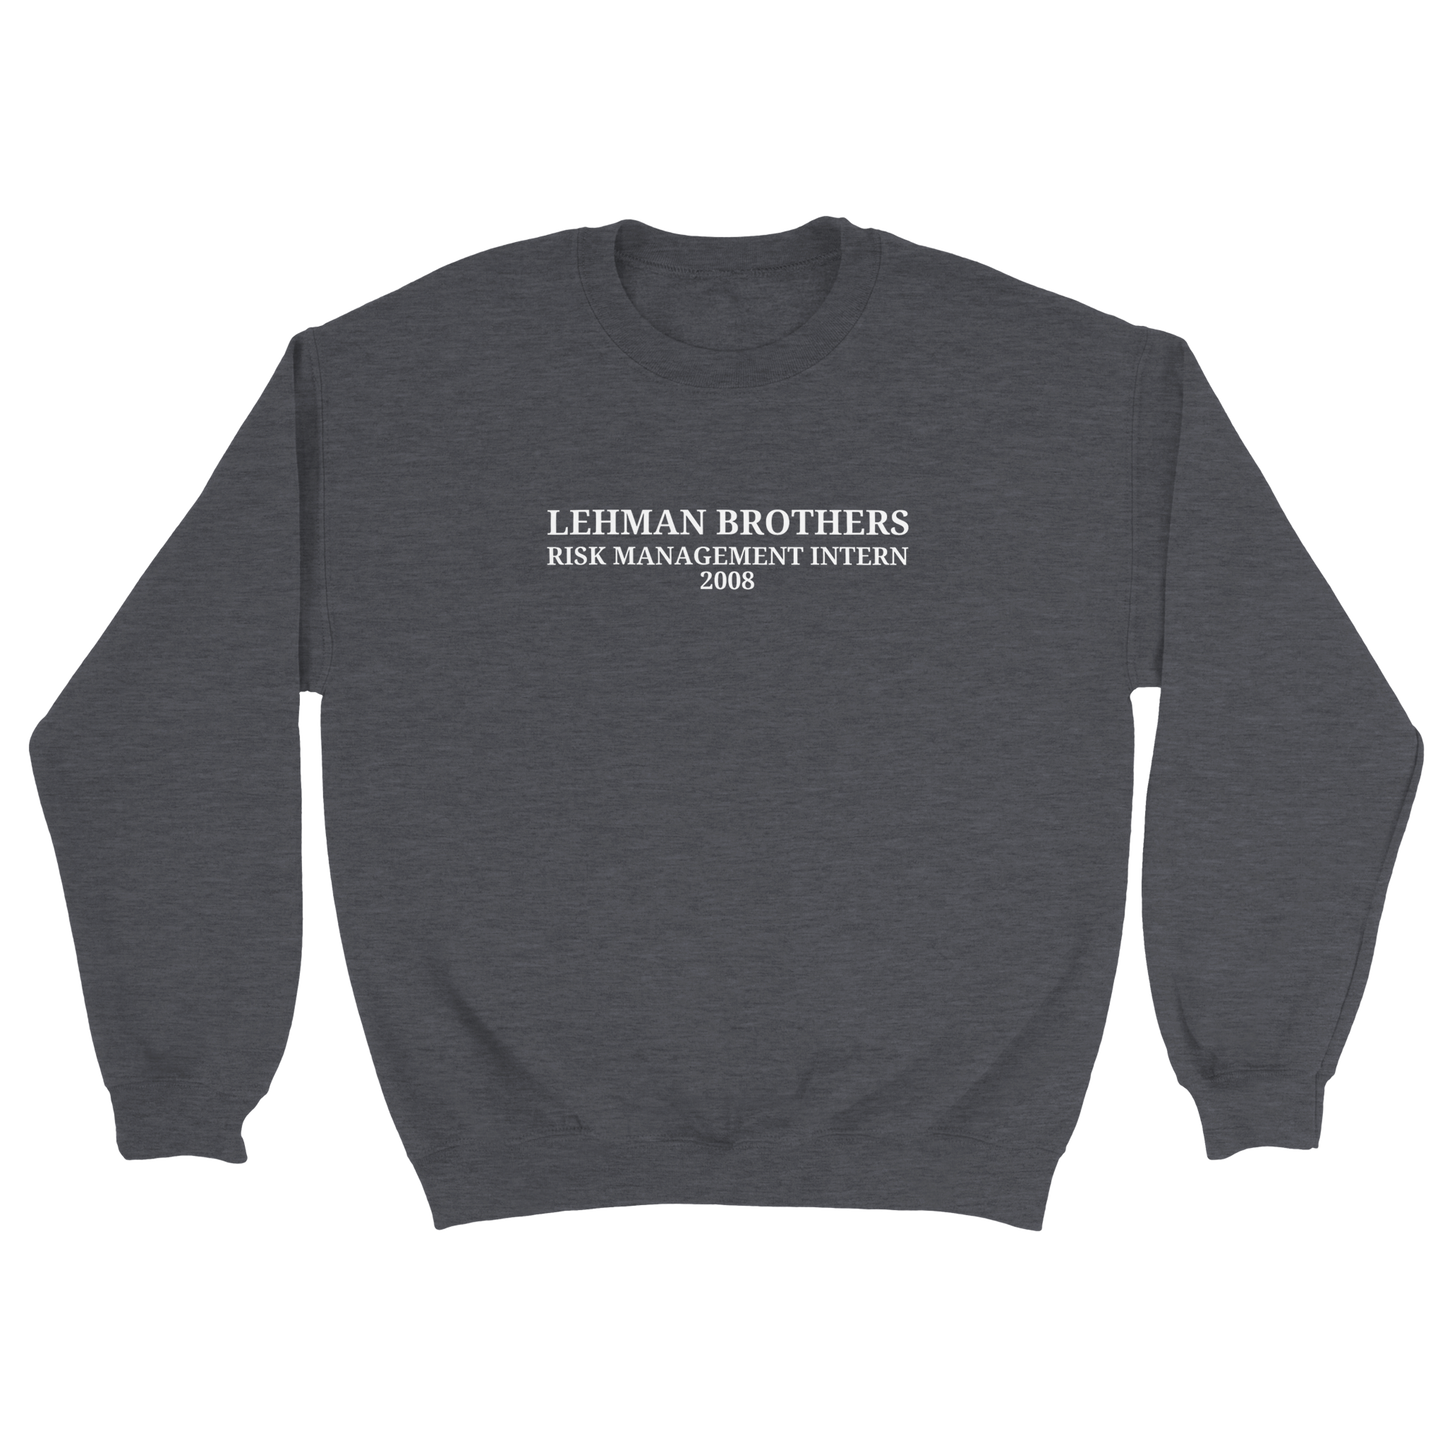 Lehman Brothers Risk Management Intern 2008 Sweater